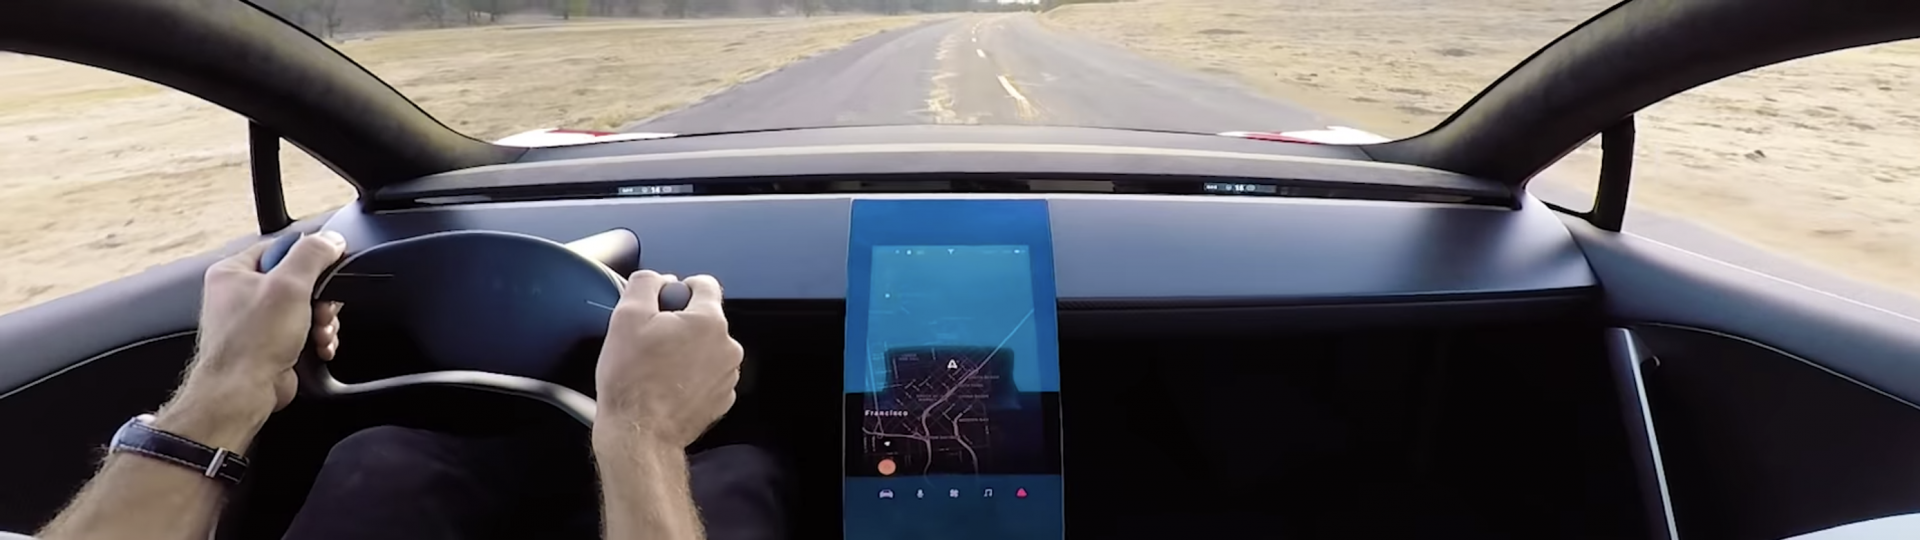 La Tesla Roadster e un veicolo misterioso in un nuovo video Tesla